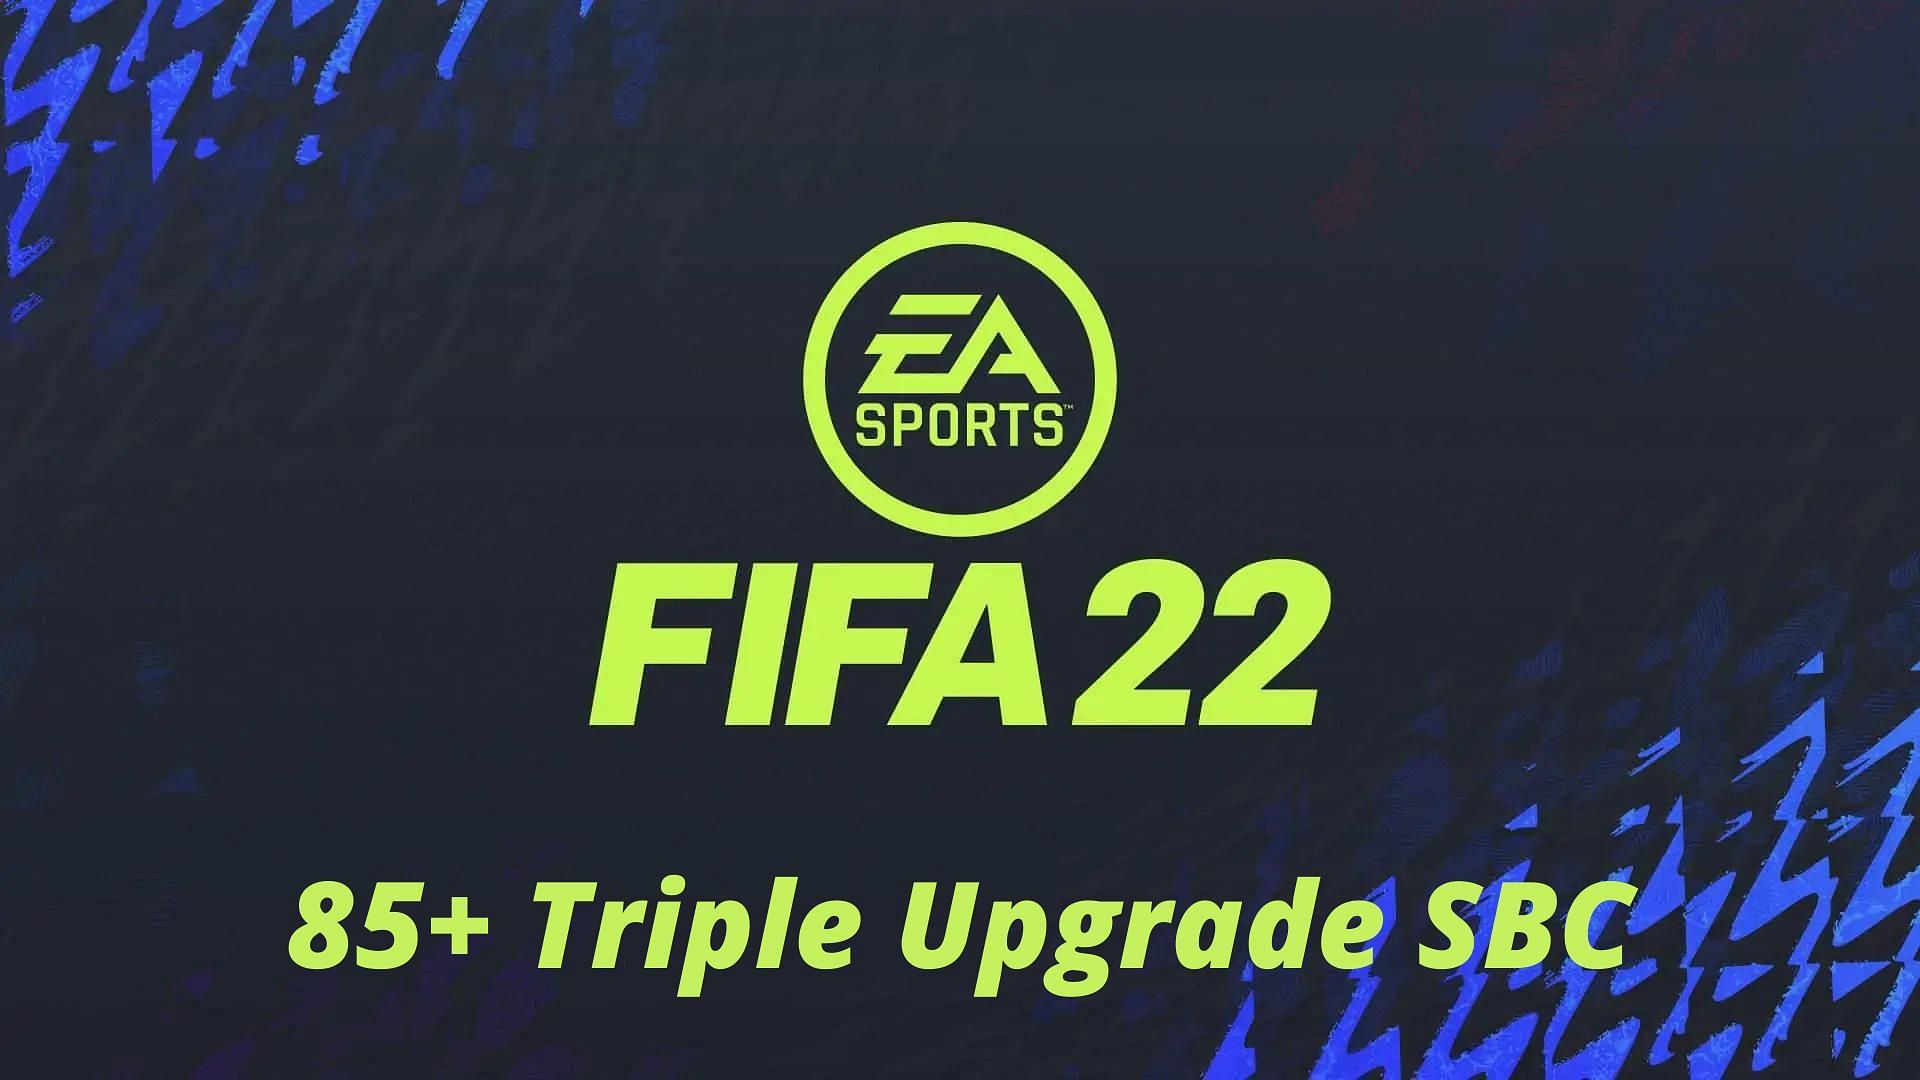 the 85+ triple upgrade SBC is now live in FIFA 22 (Image via Sportskeeda)